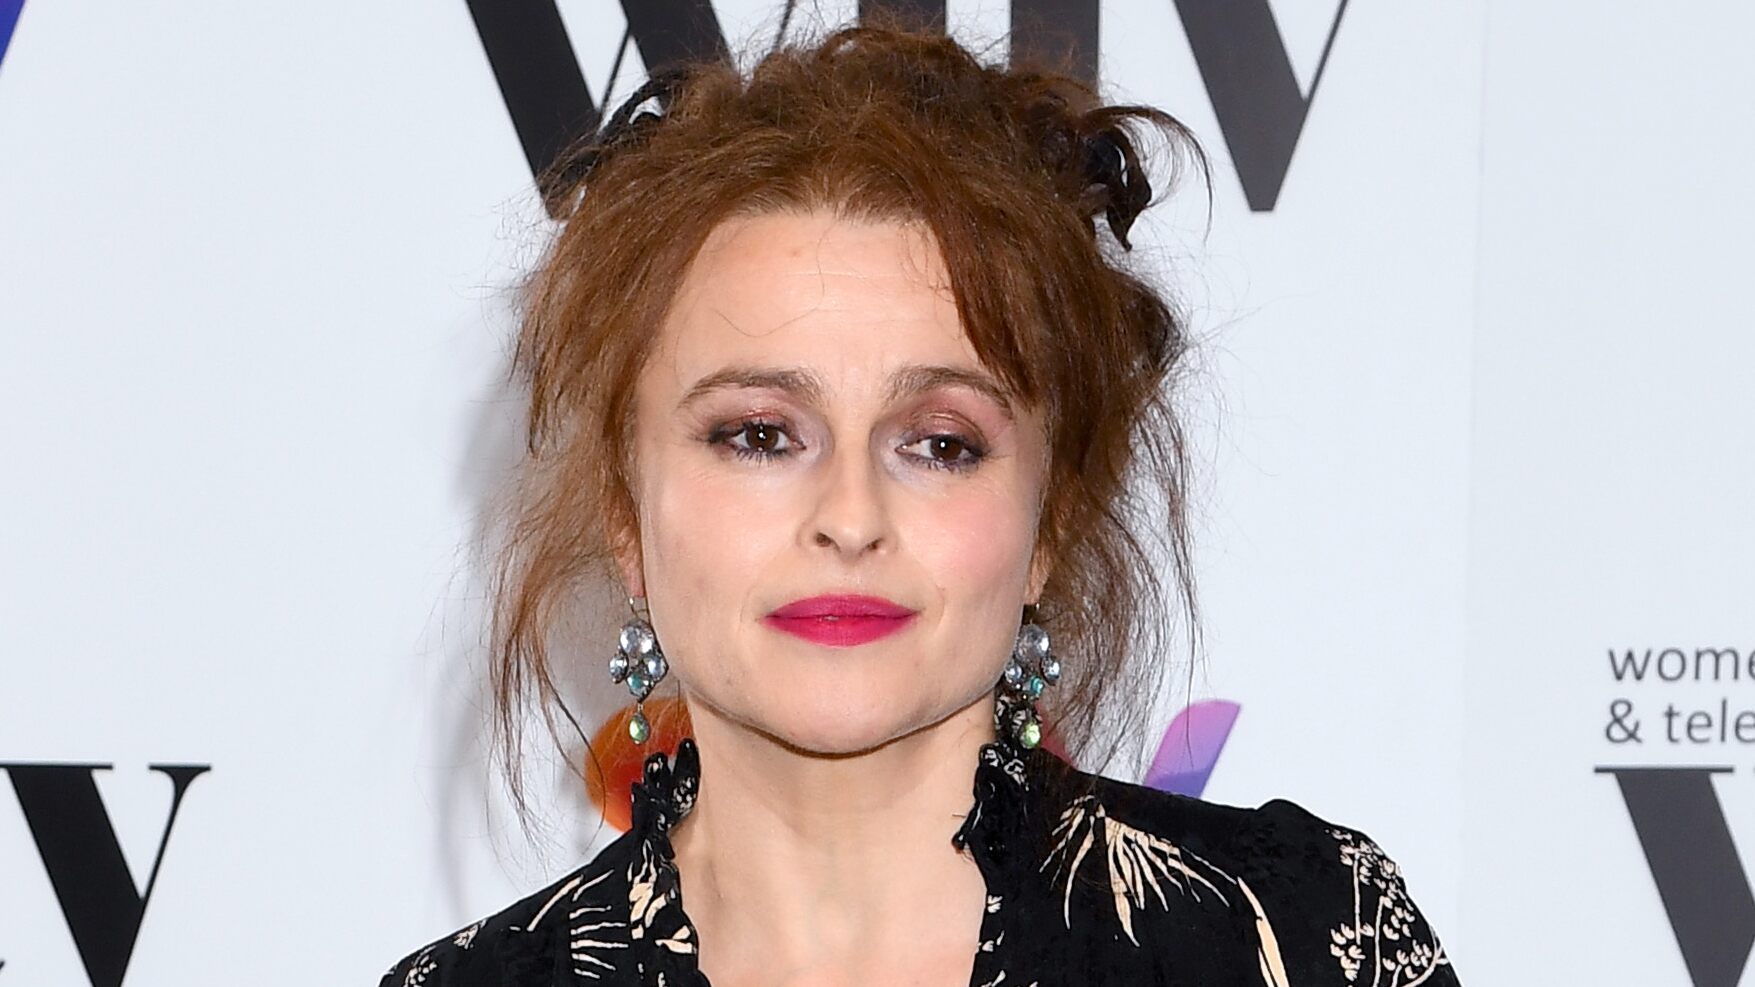 Netflix's 'The Crown' slammed after Helena Bonham Carter's character makes 'offensive slur' - www.foxnews.com - Scotland